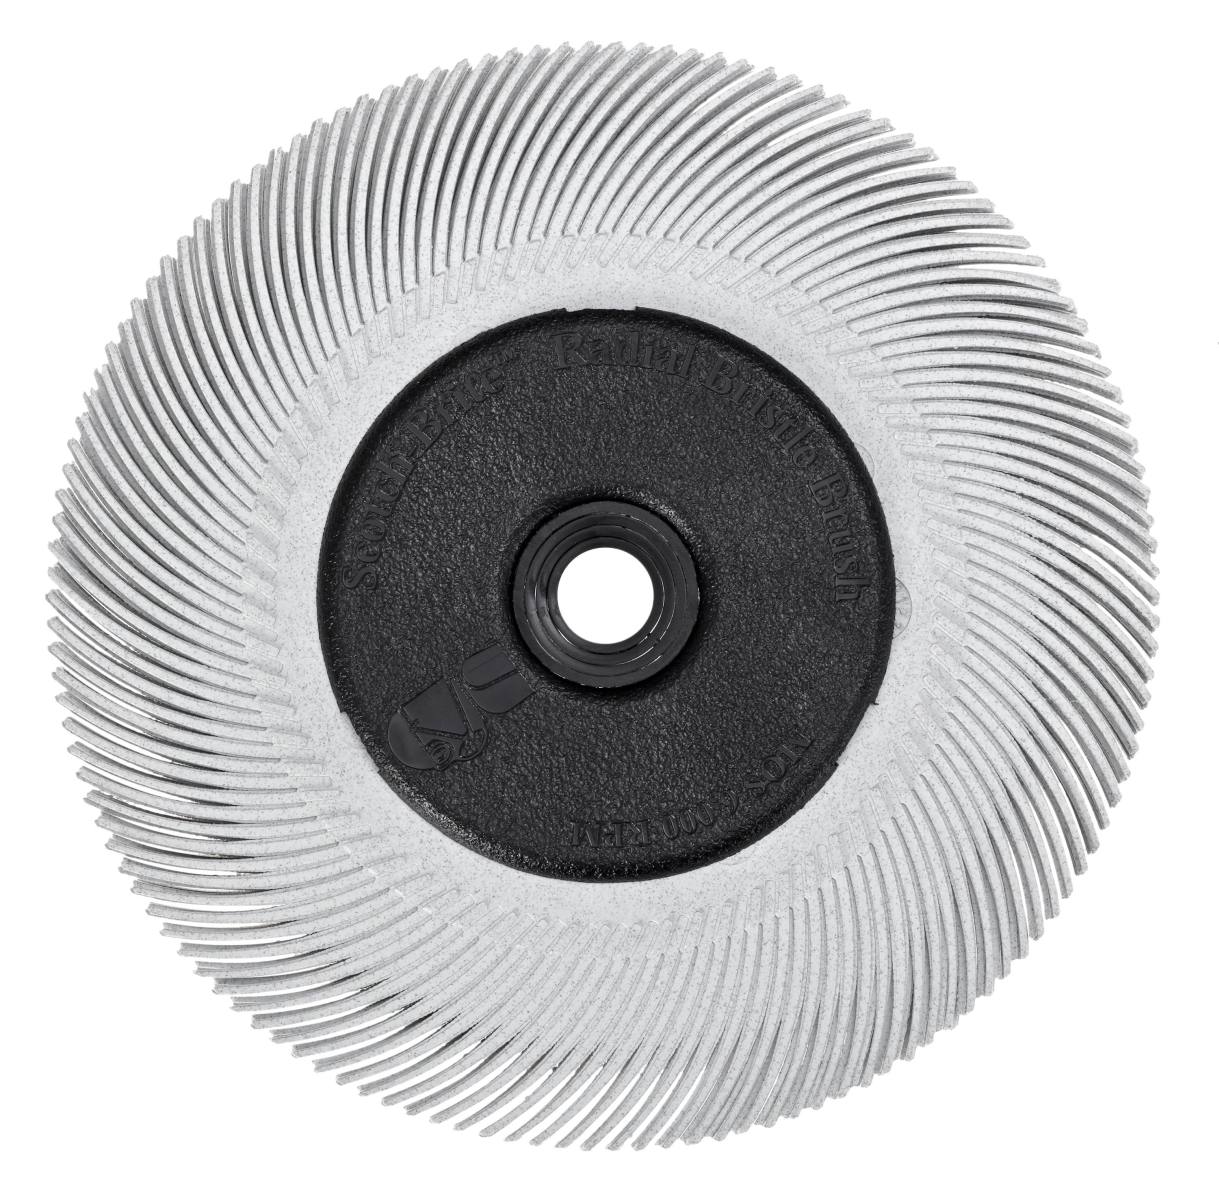 3M Scotch-Brite Radial Bristle Disc BB-ZB avec bride, blanc, 152,4 mm, P120, type C #33212